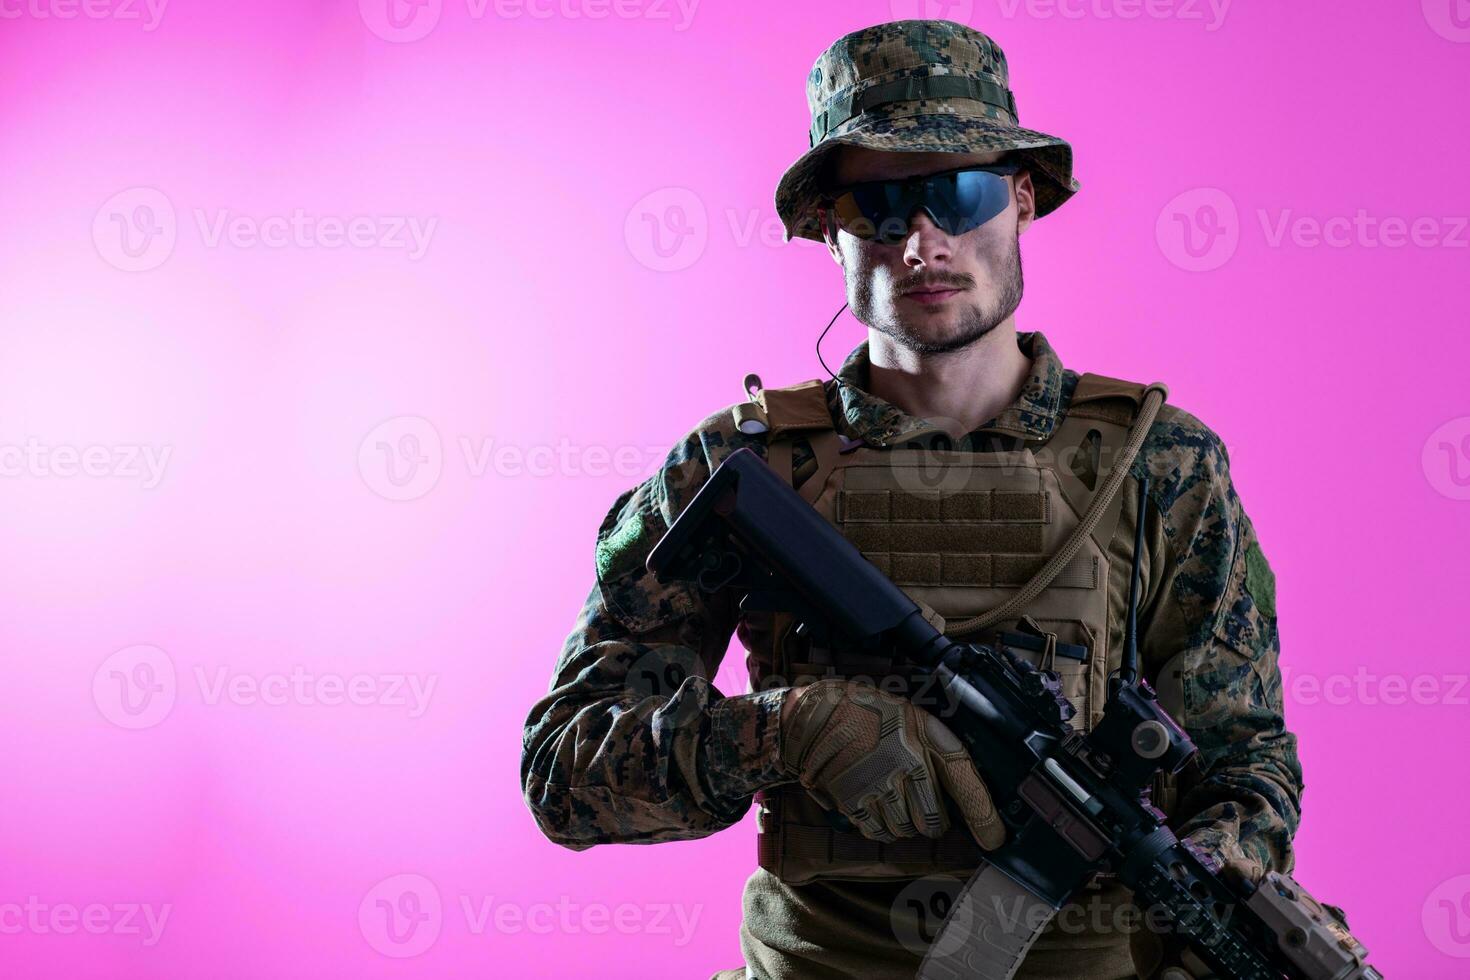 modern oorlogvoering soldaat roze backgorund foto